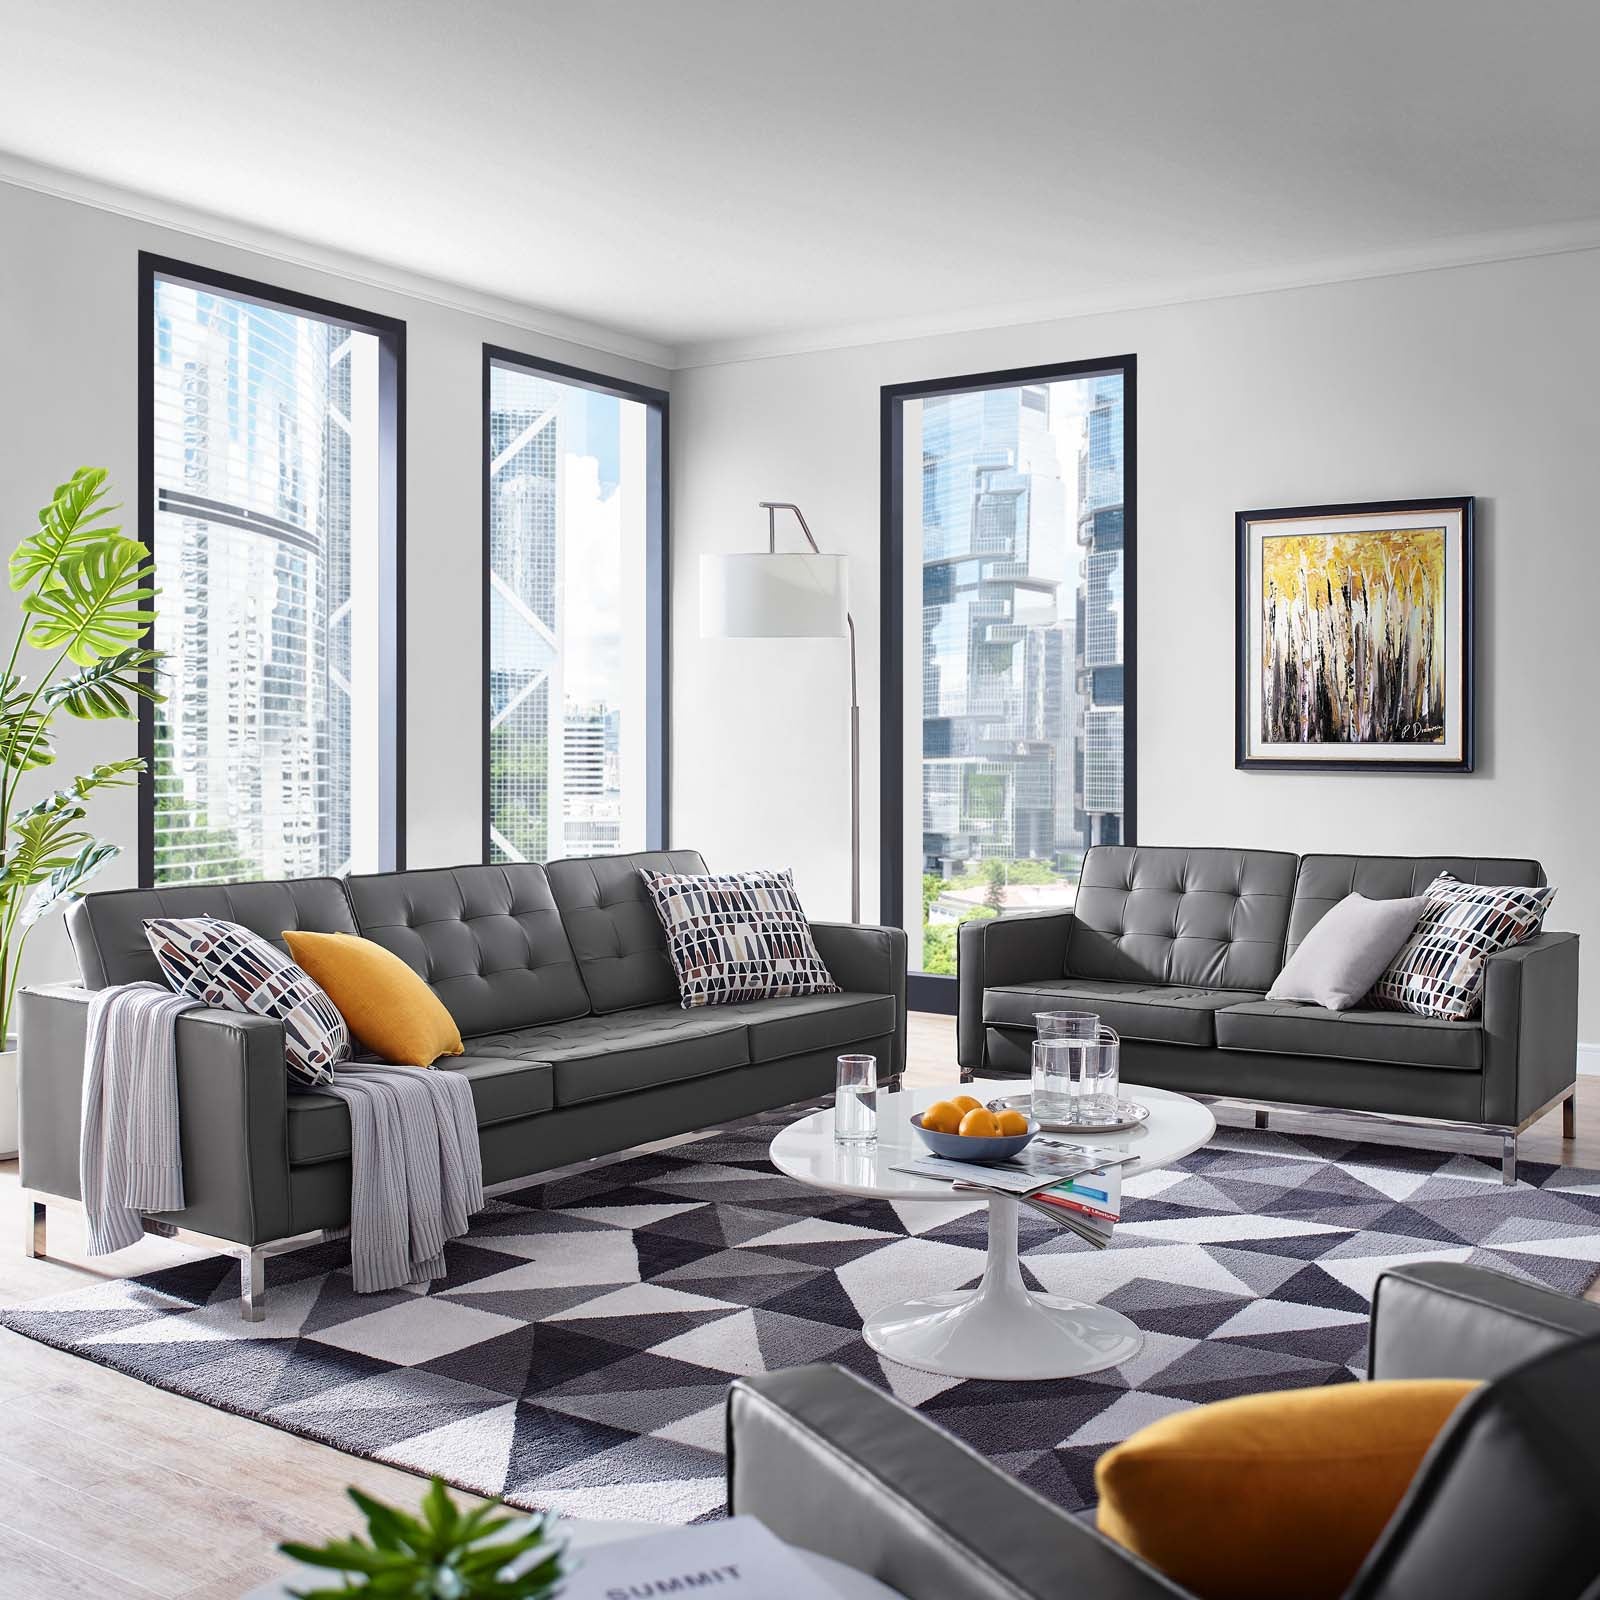 Modway Living Room Sets - Loft-Tufted-Vegan-Leather-2-Piece-Furniture-Set-Silver-Gray